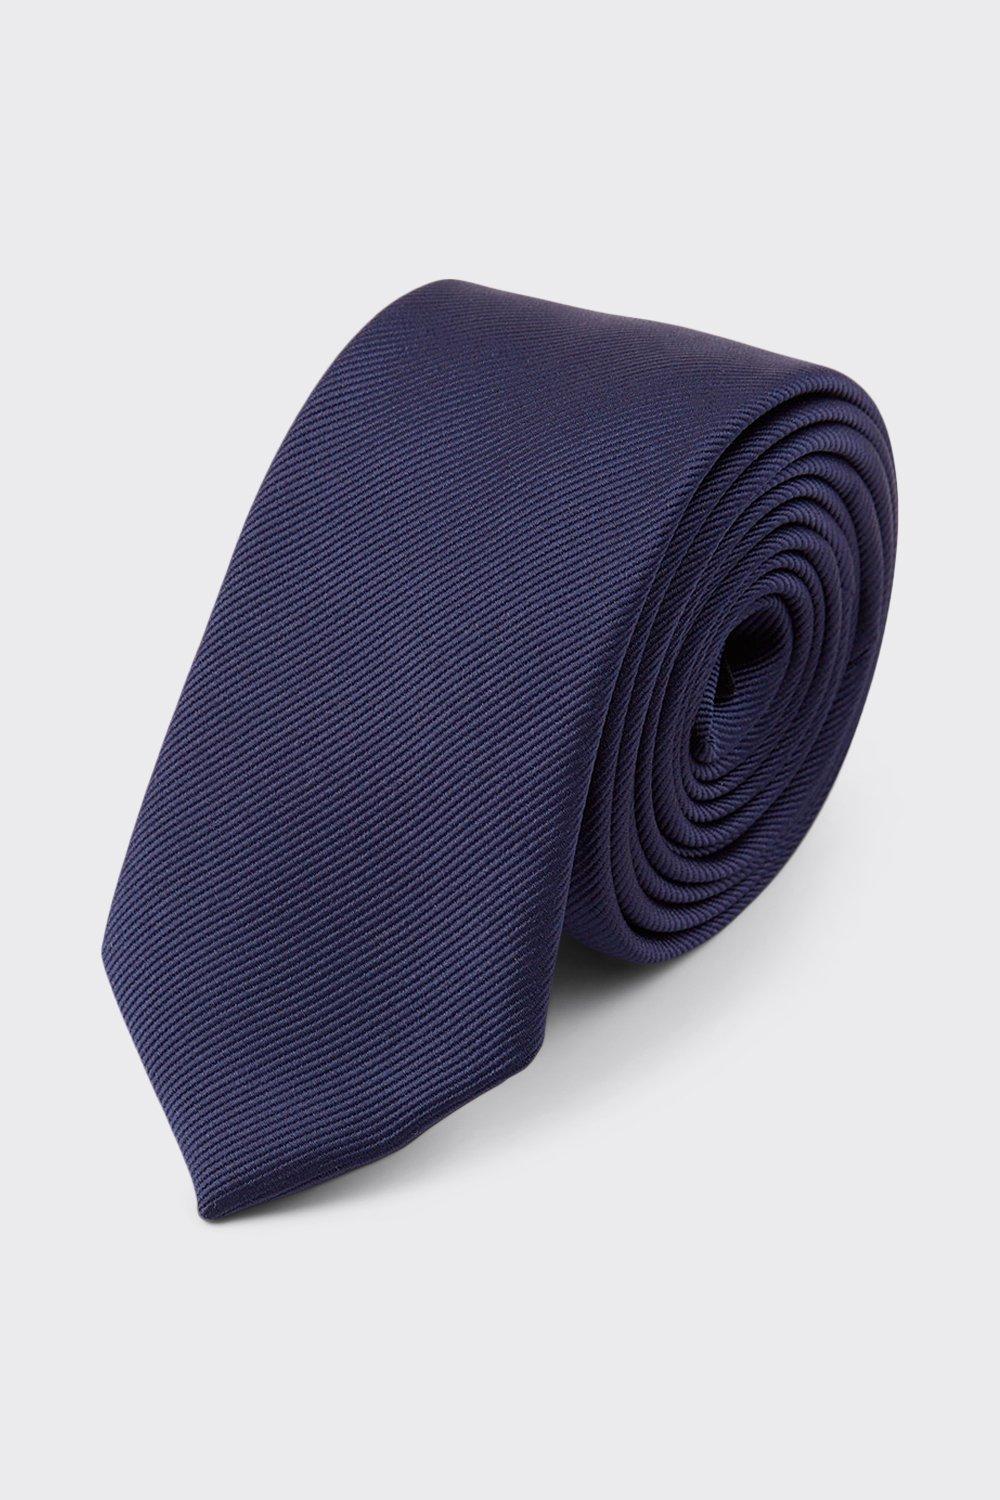 Slim Navy Tie